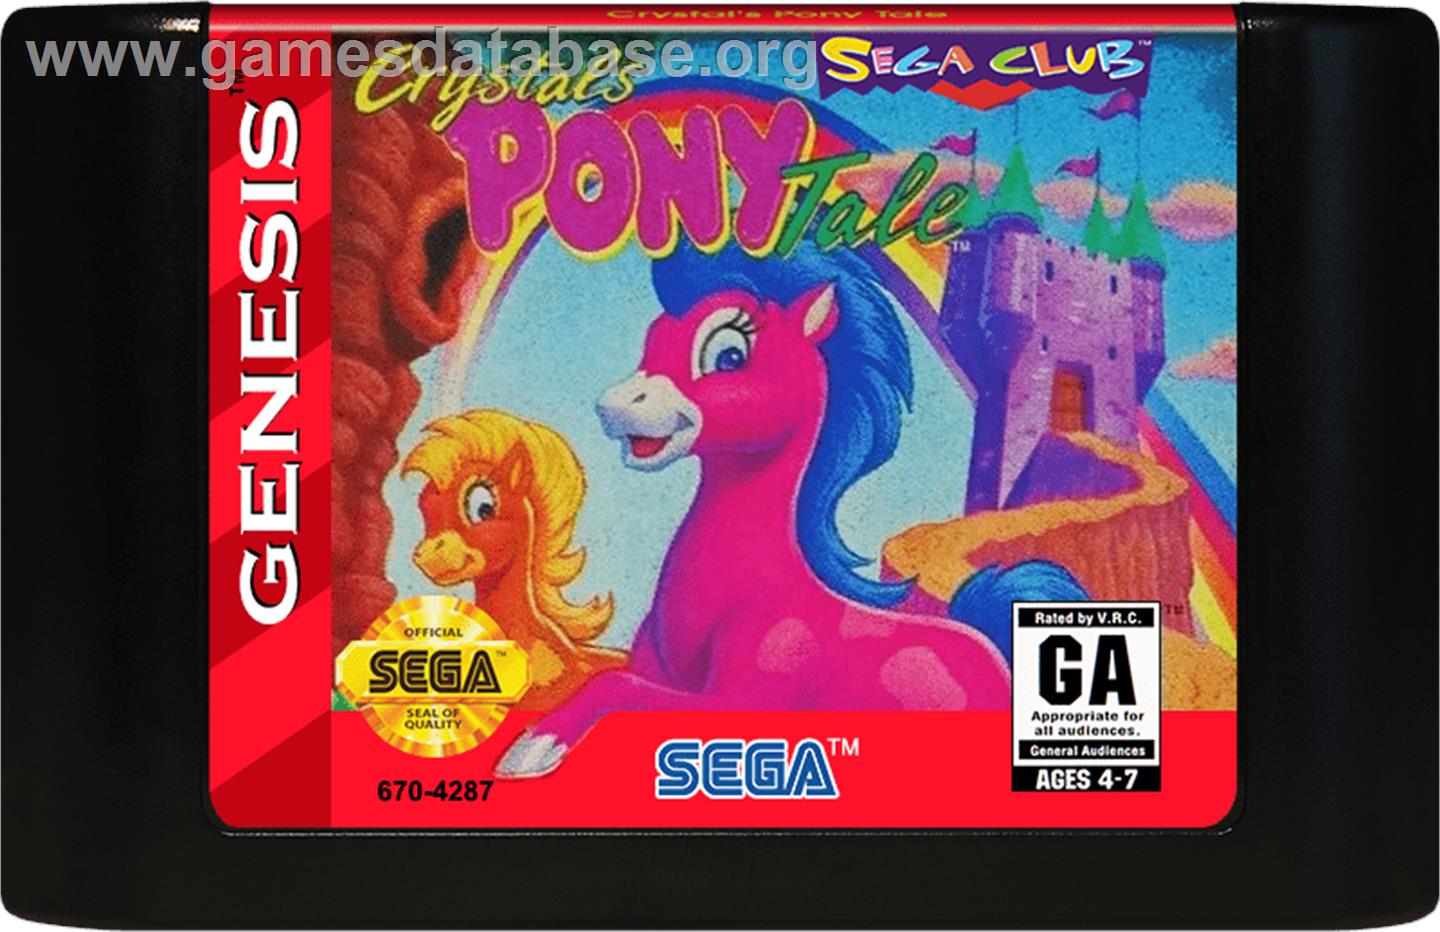 Crystal's Pony Tale - Sega Genesis - Artwork - Cartridge